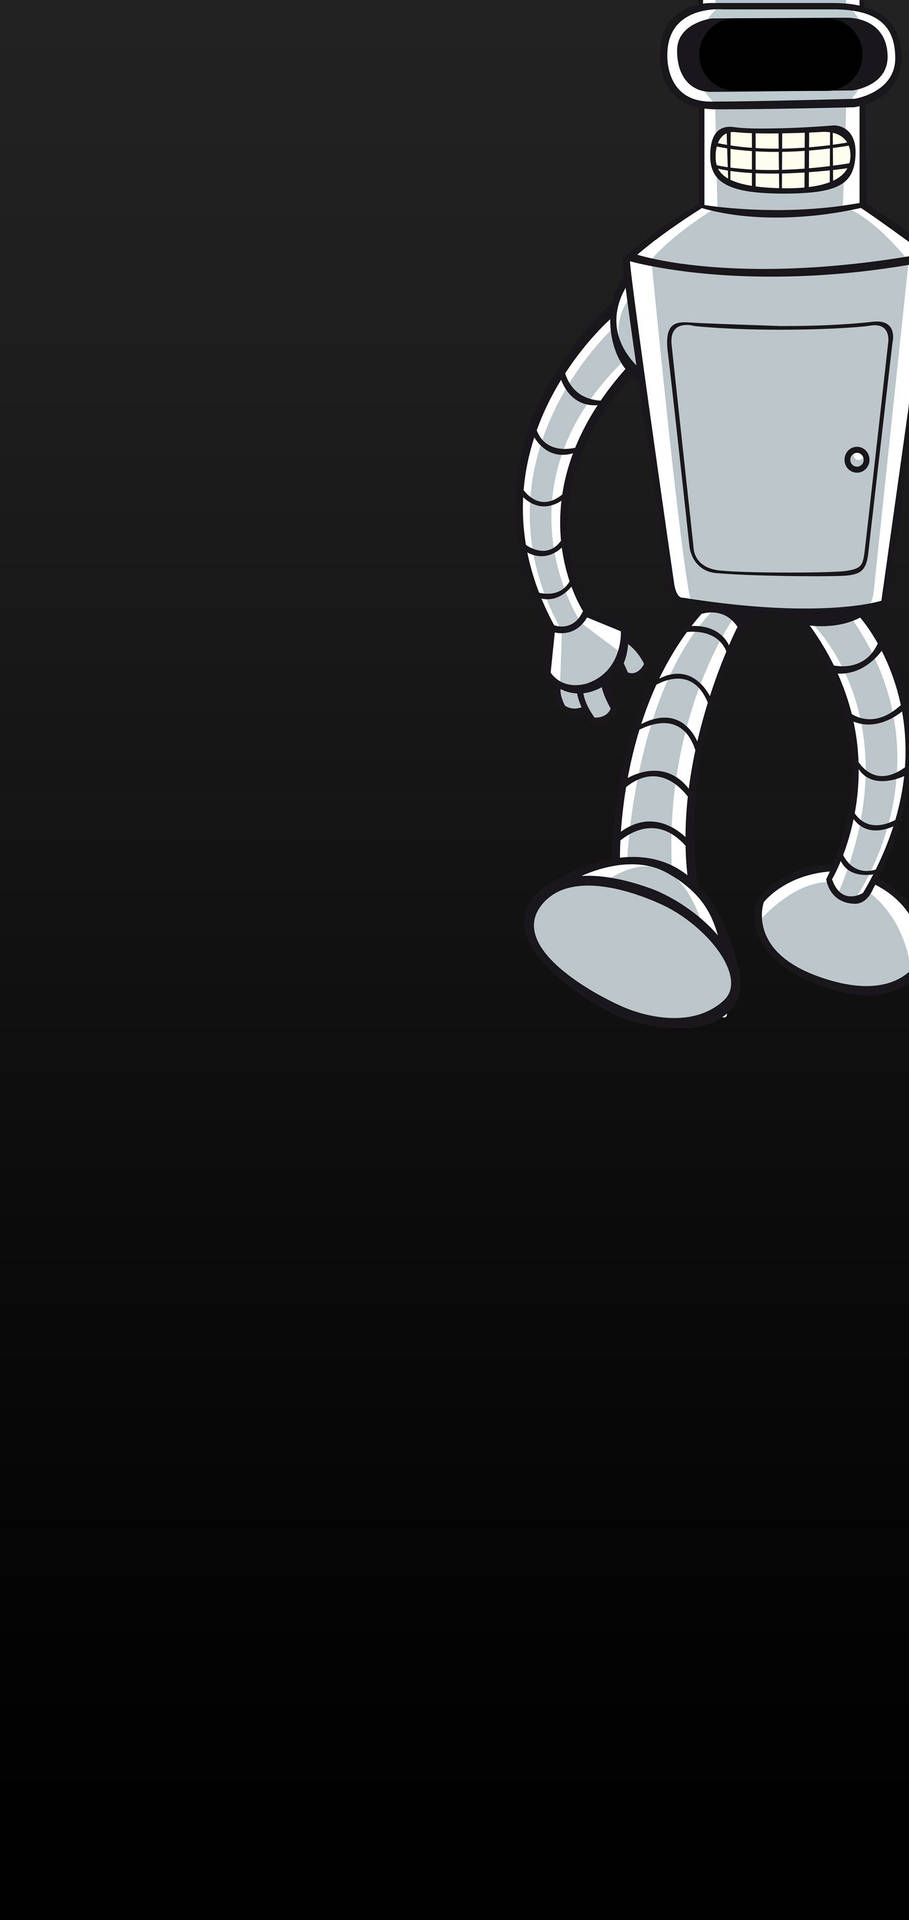 Galaxy S10 Bender Of Futurama Background